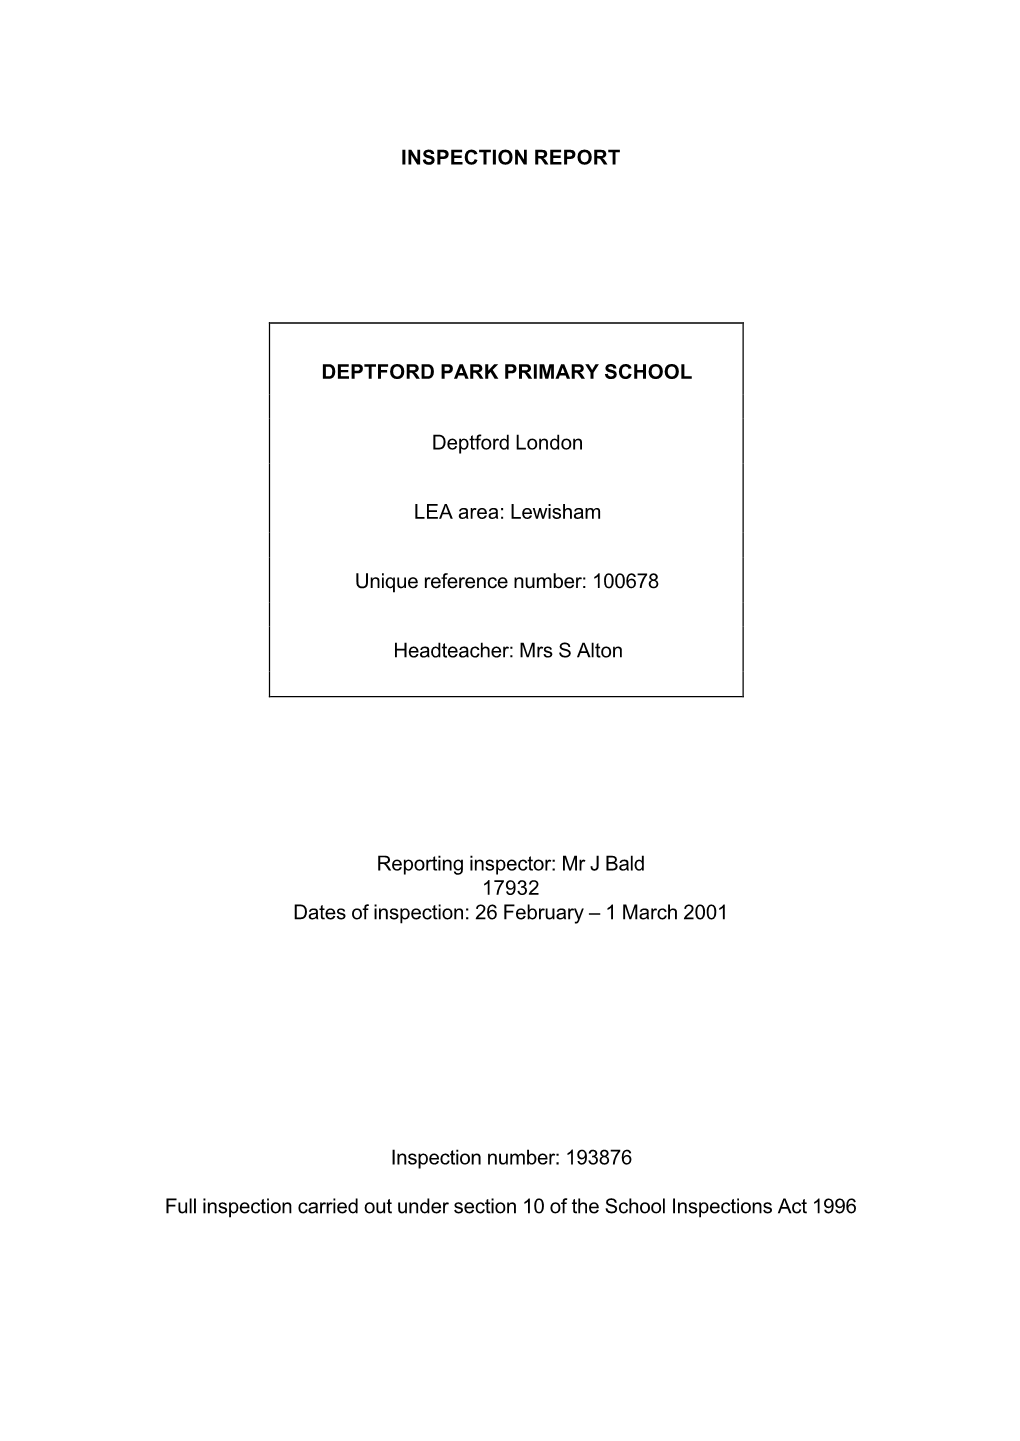 INSPECTION REPORT DEPTFORD PARK PRIMARY SCHOOL Deptford London LEA Area: Lewisham Unique Reference Number: 100678 Headteacher: M